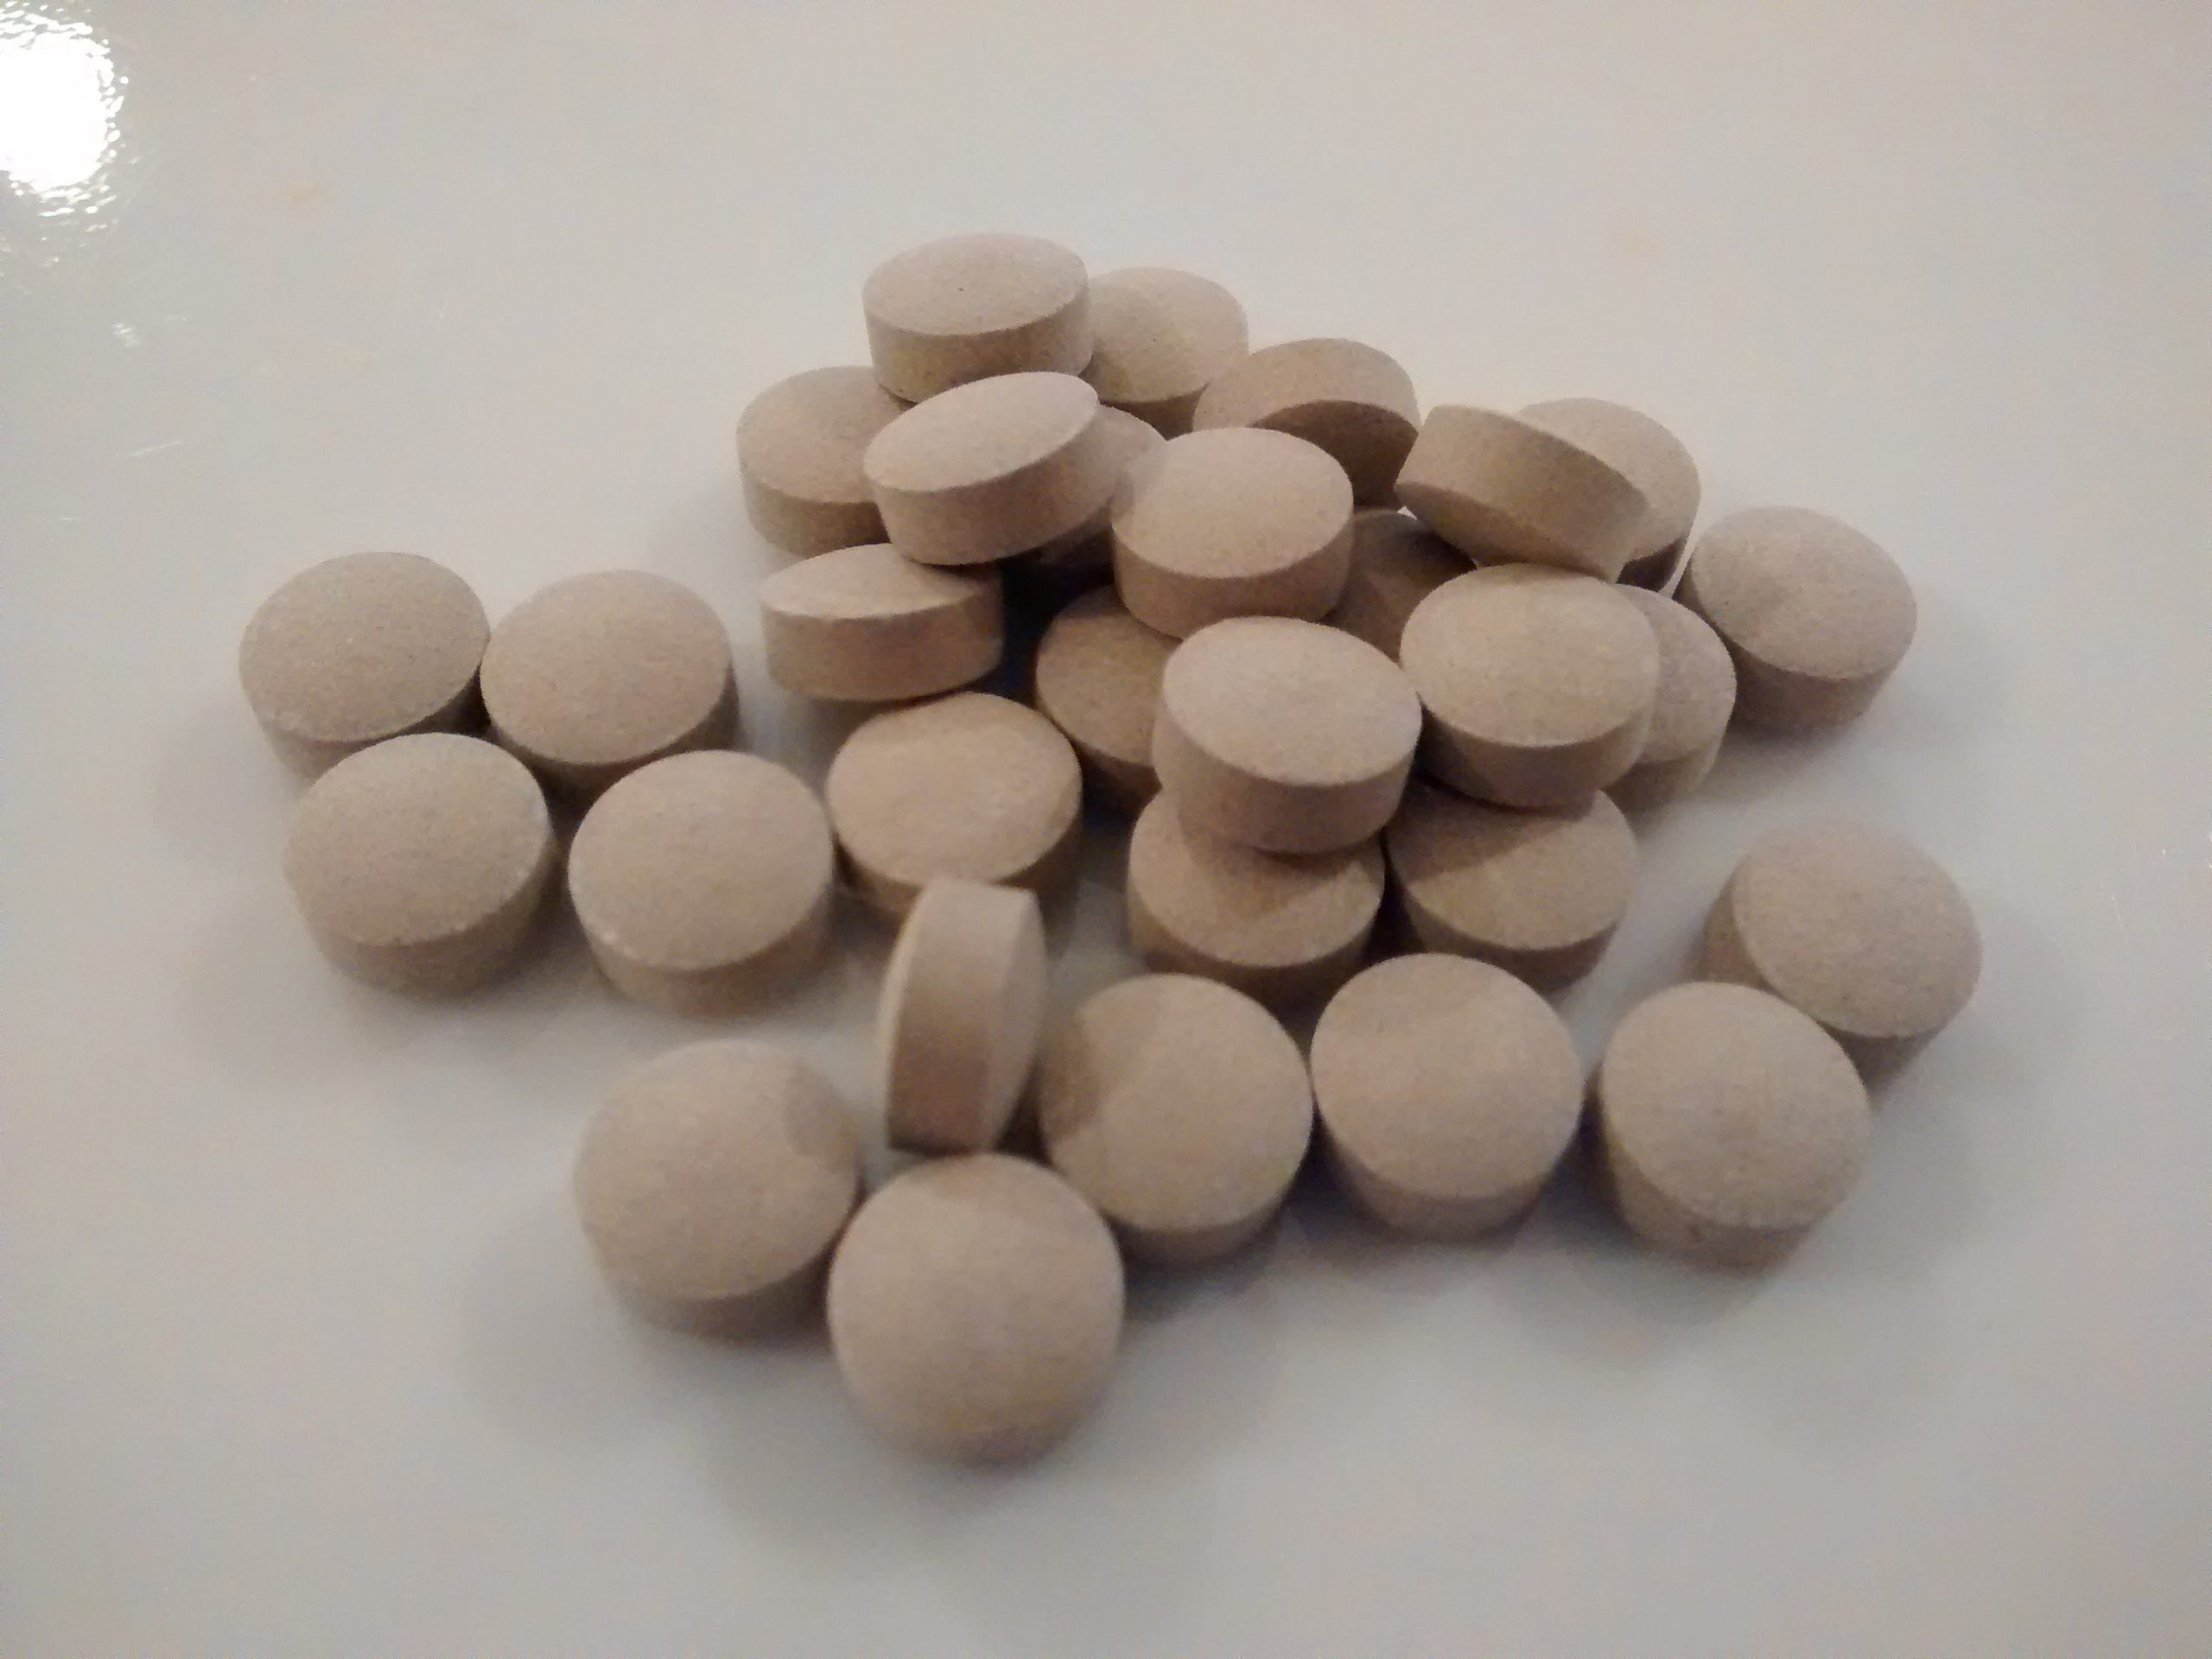 Denmark to obtain millions of iodine tablets